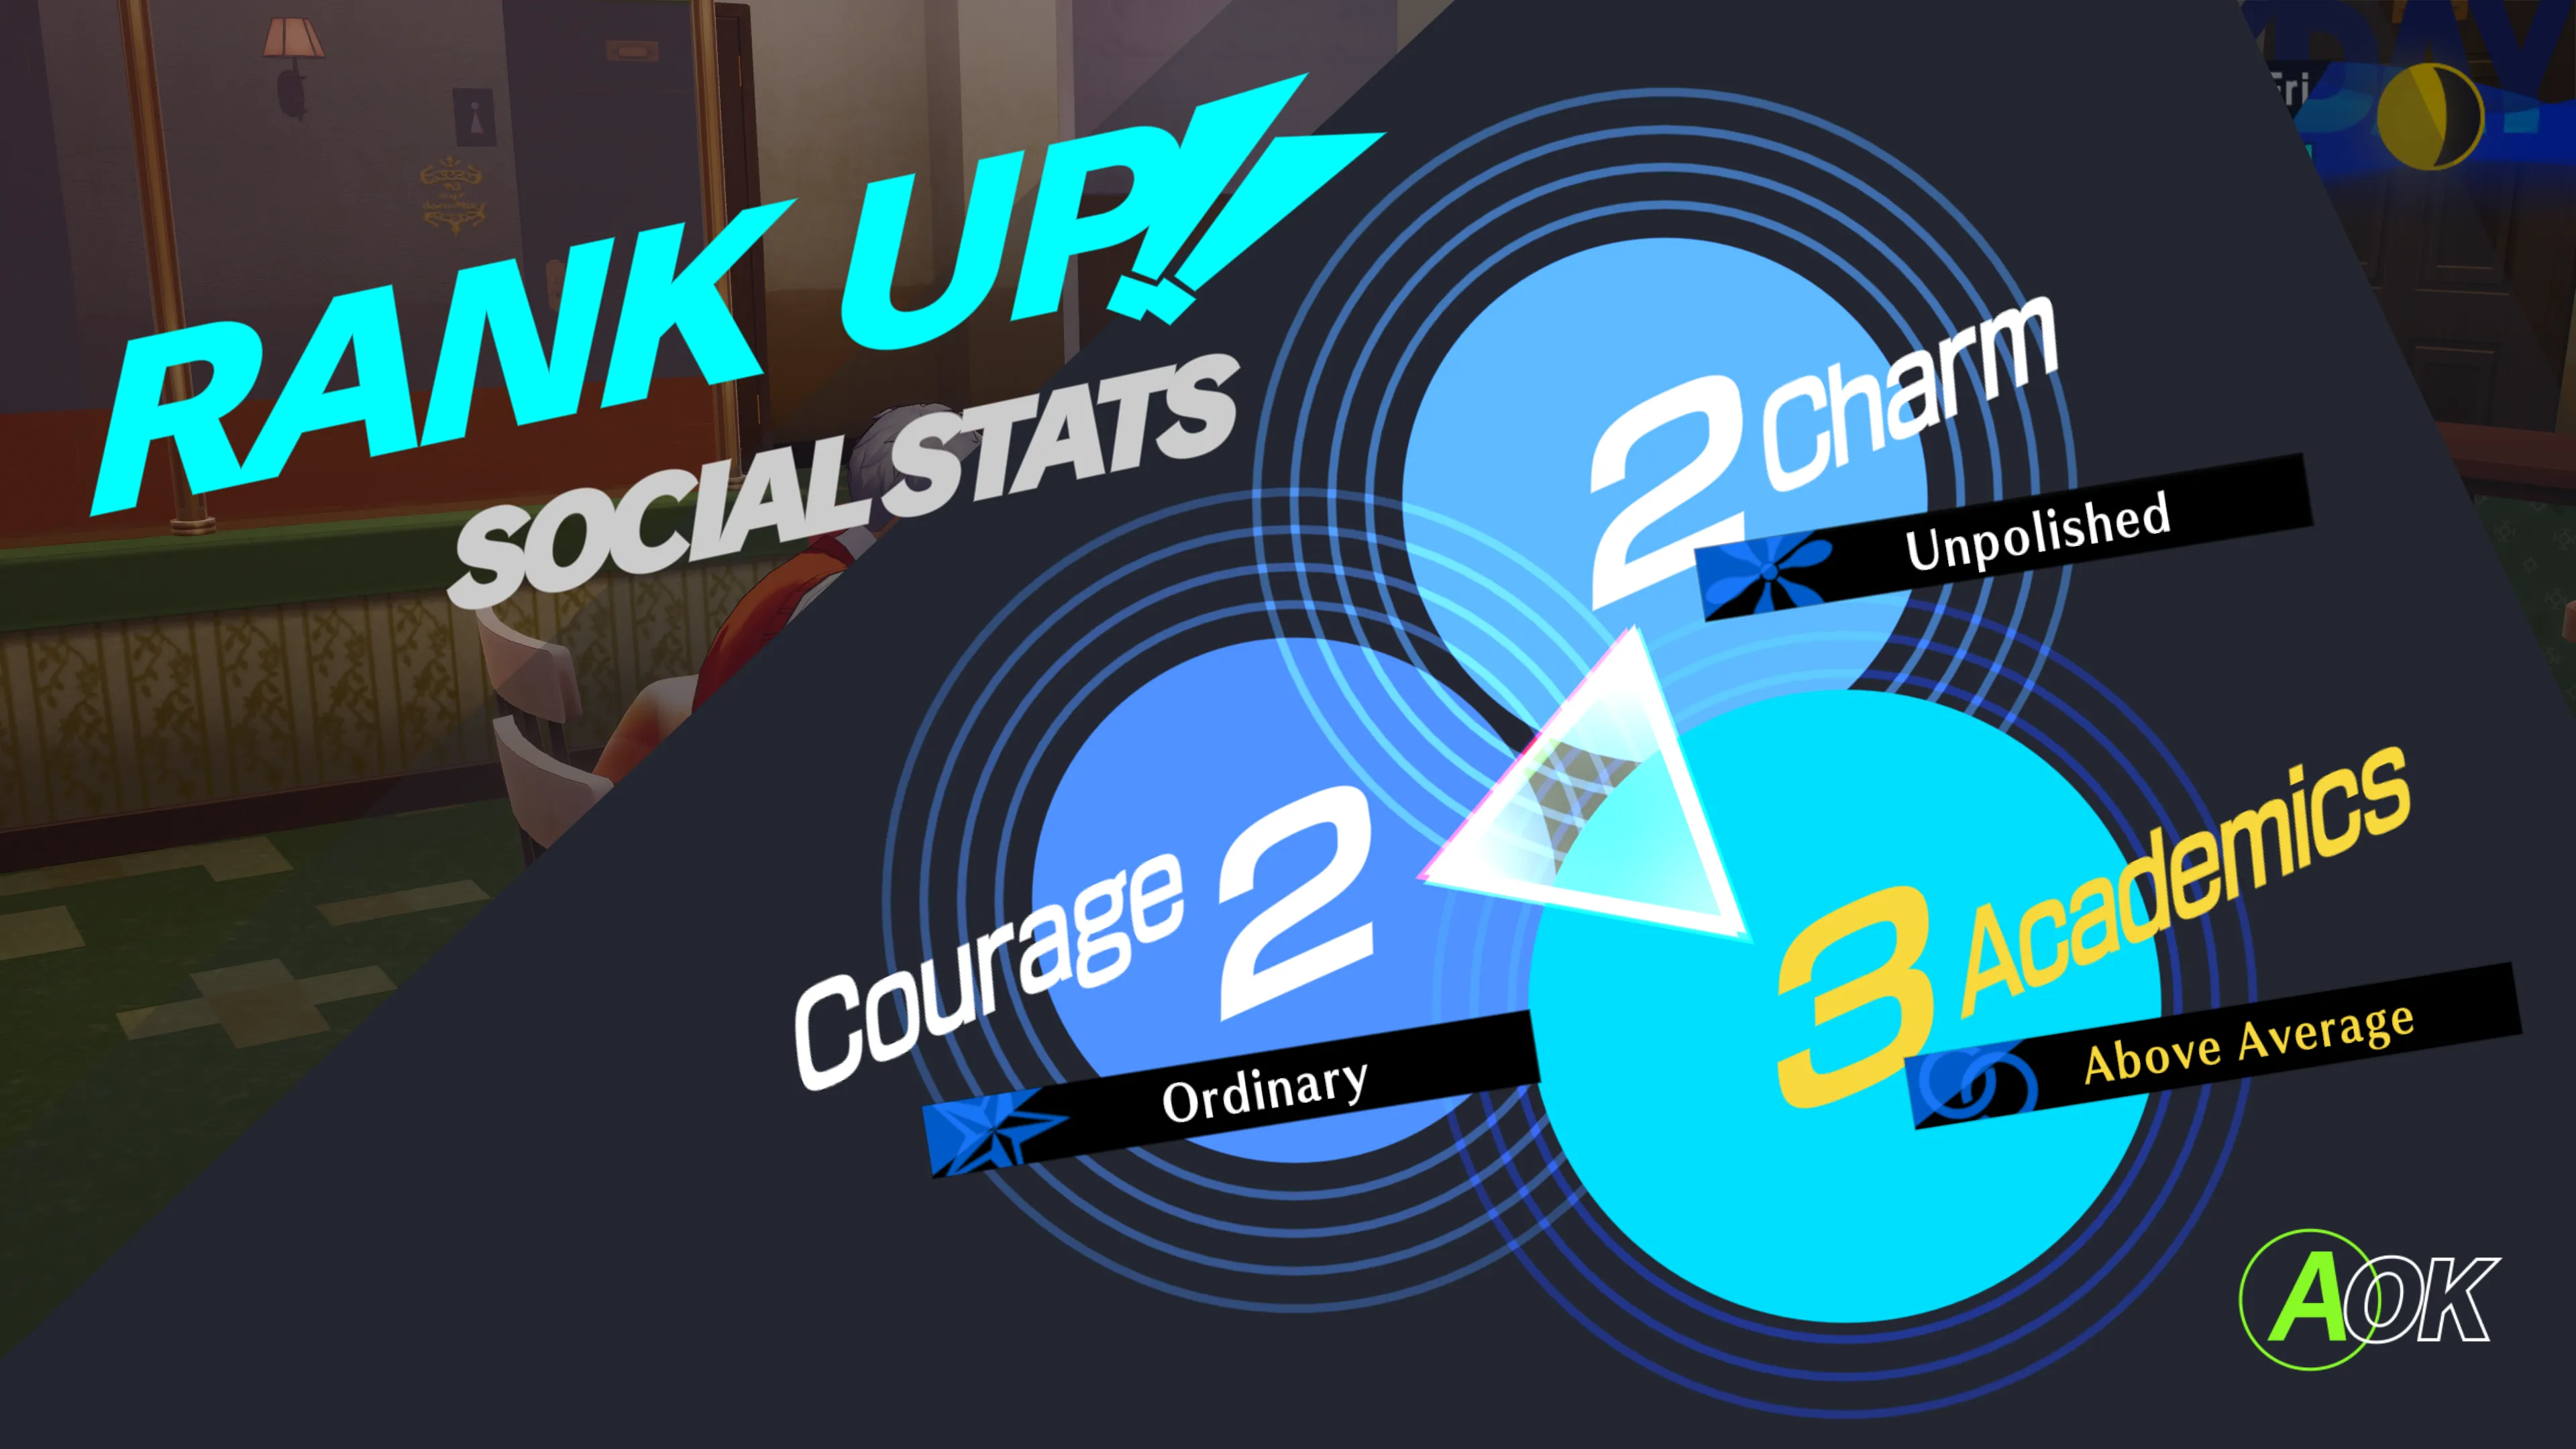 Persona 3 Reloadの社会的ステータス画面がアカデミックに上昇しているのを見る